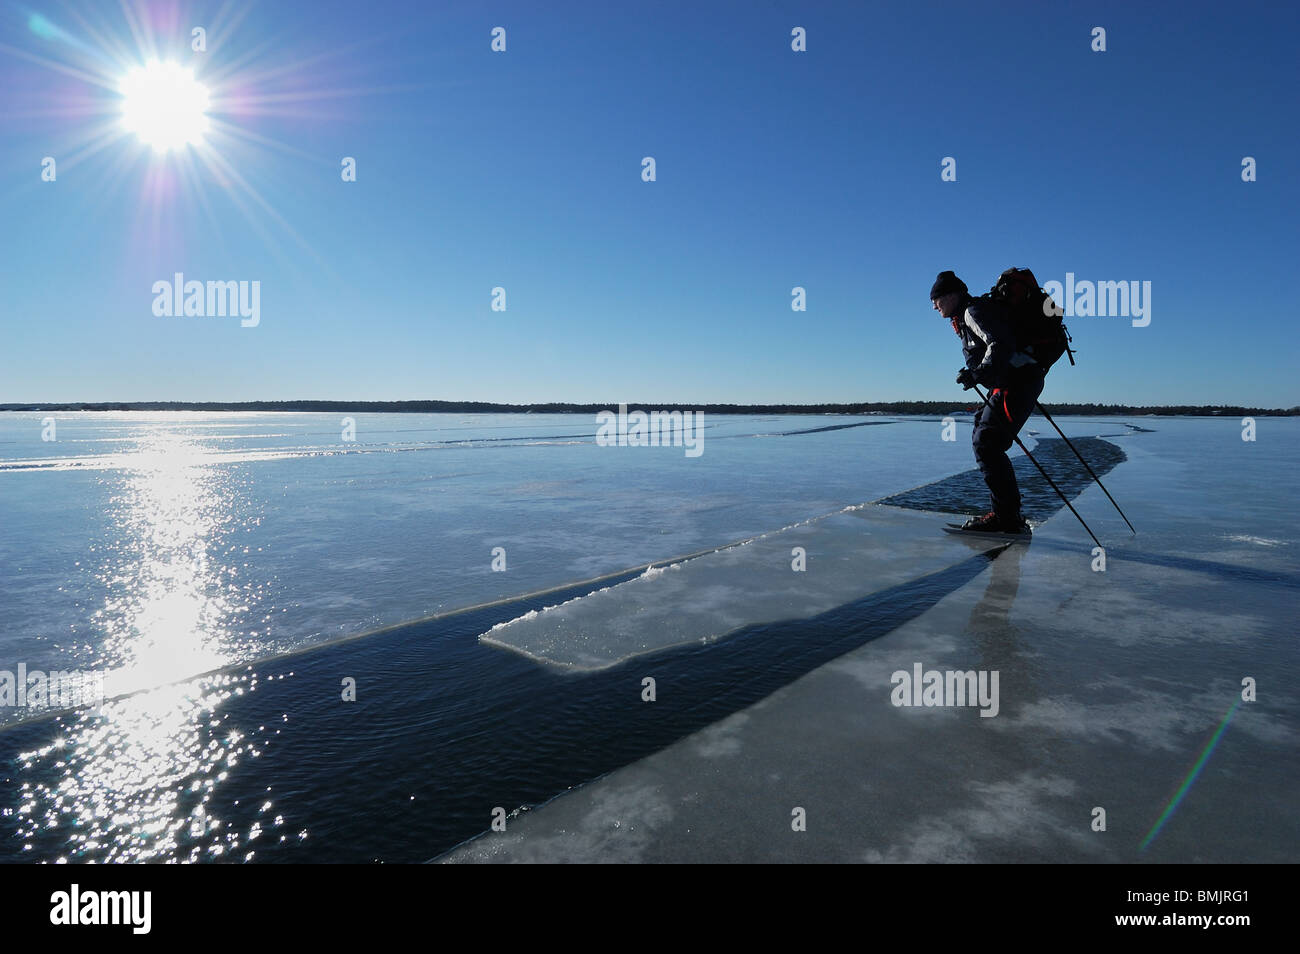 A man ice skating on melting ice Stock Photo